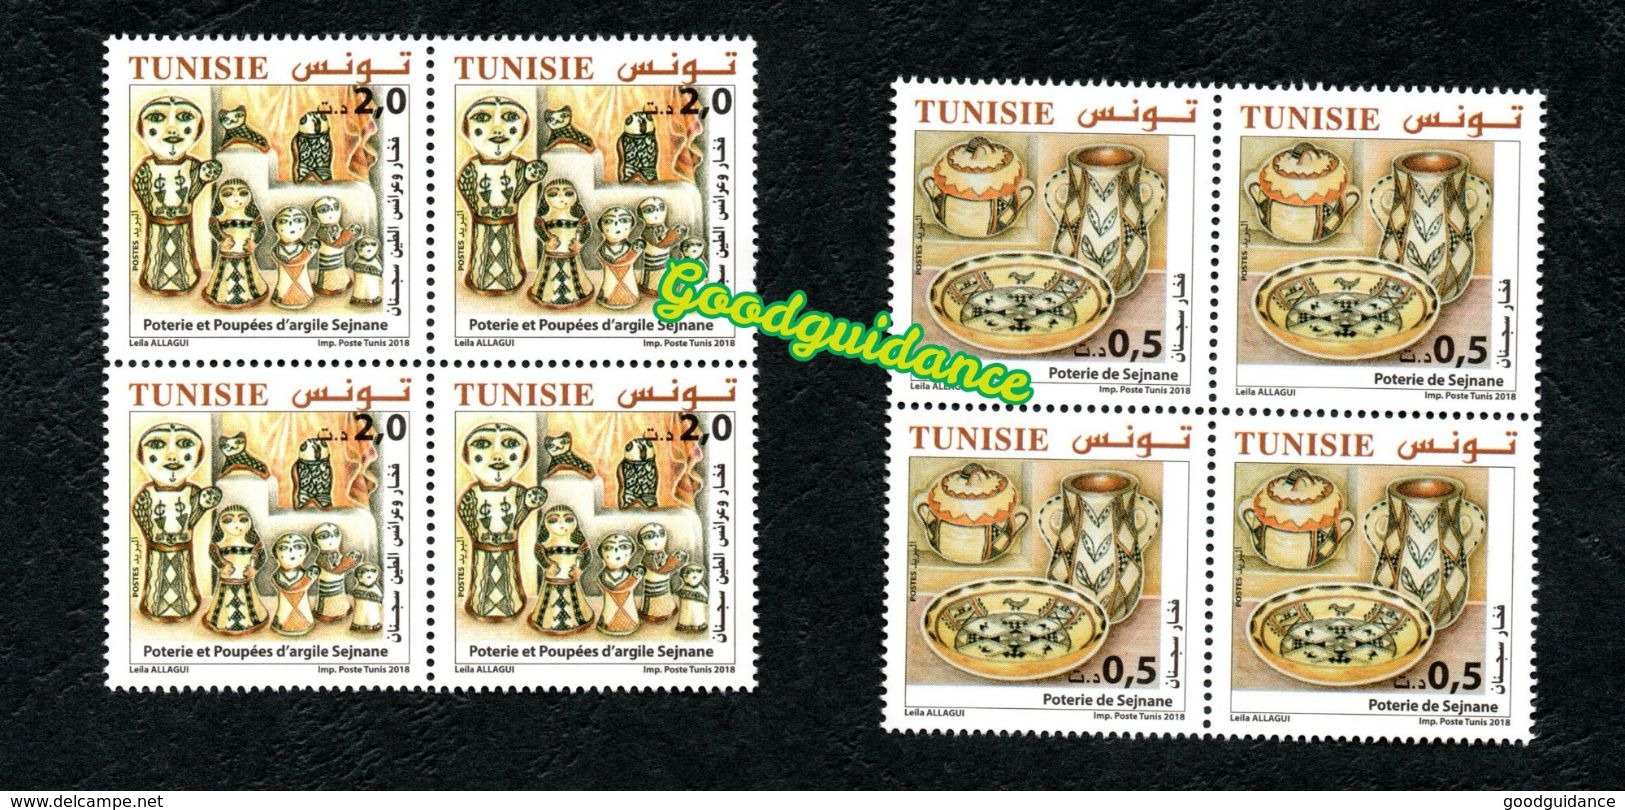 2018- Tunisia- Tunisie- Poterie De Tunise - Pottery Of Tunisia- Block Of 4 Stamps - MNH** - Tunisia